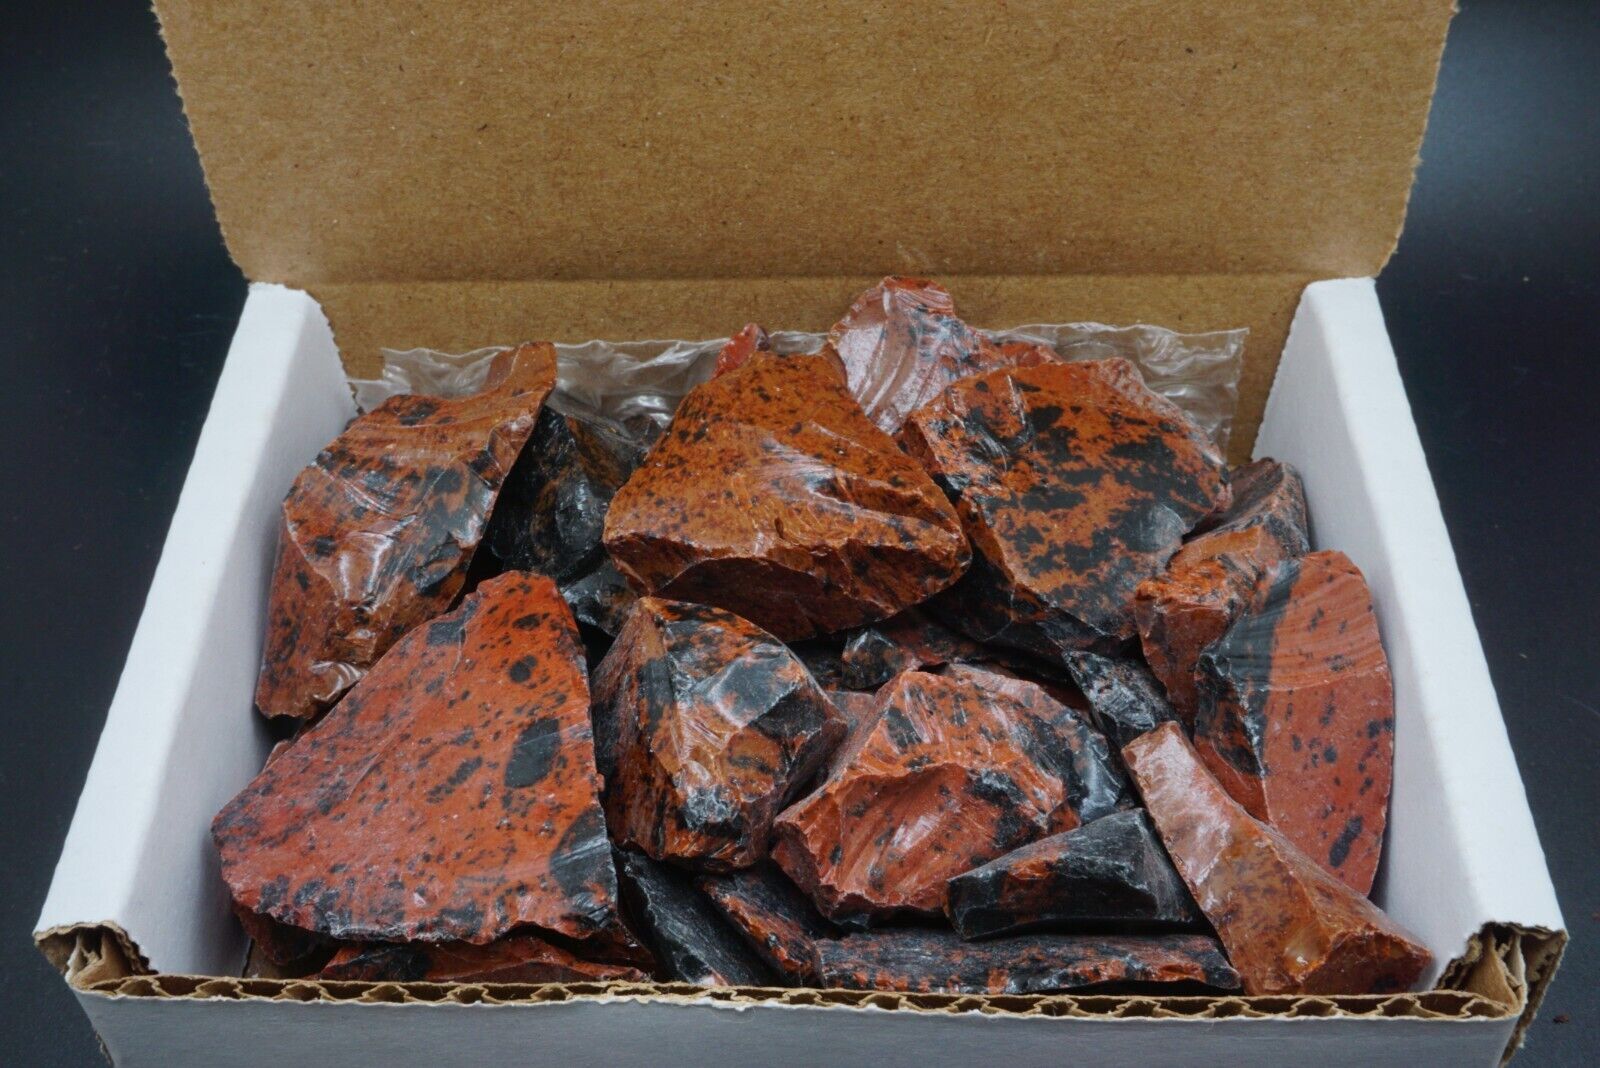 Mahogany Obsidian 1/2 Lb Box Natural Brown Black Crystal Chunks Volcanic Glass